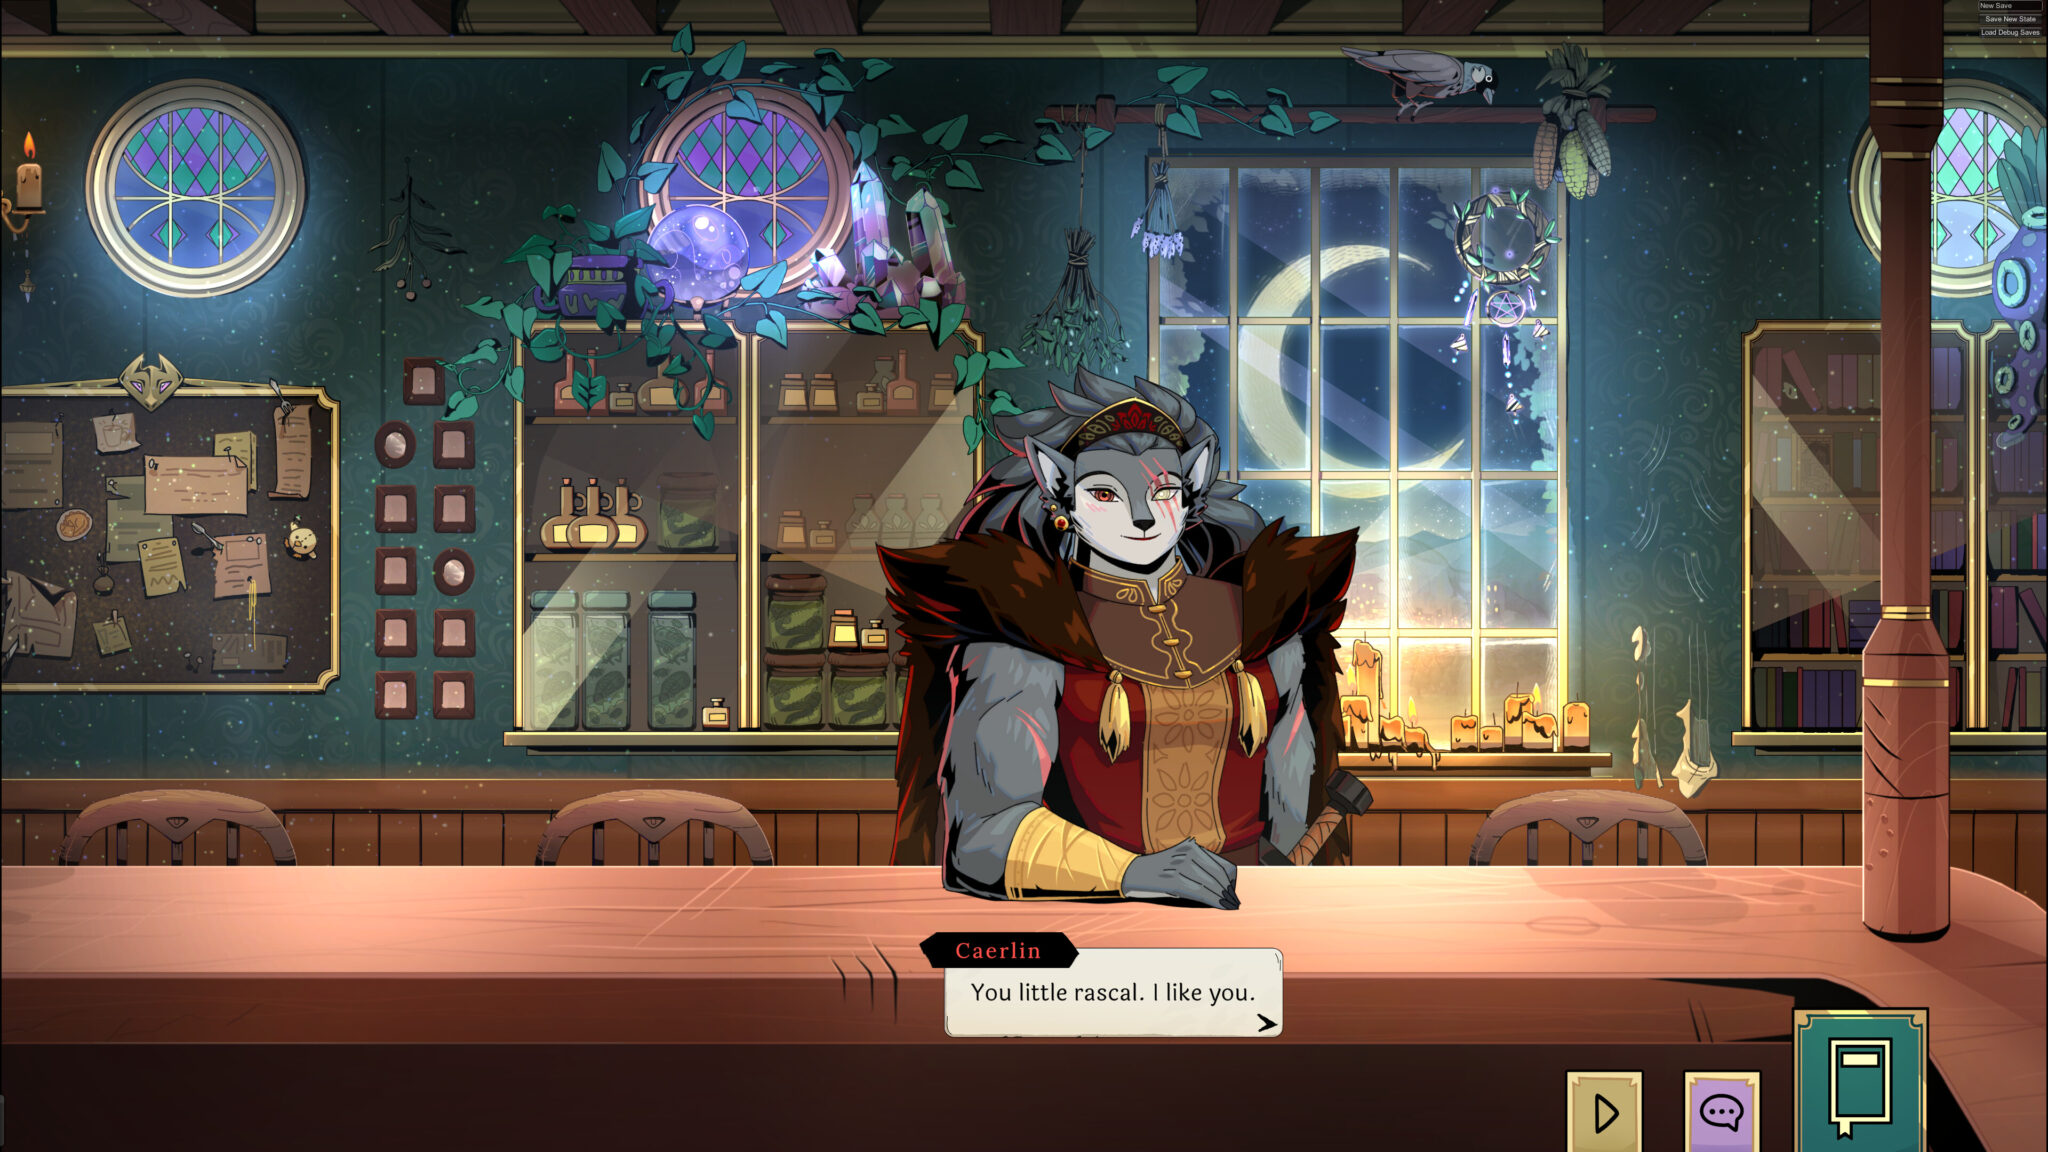 Tavern Talk screenshot of a wolf-person character named Caerlin saying "You little rascal. I like you."